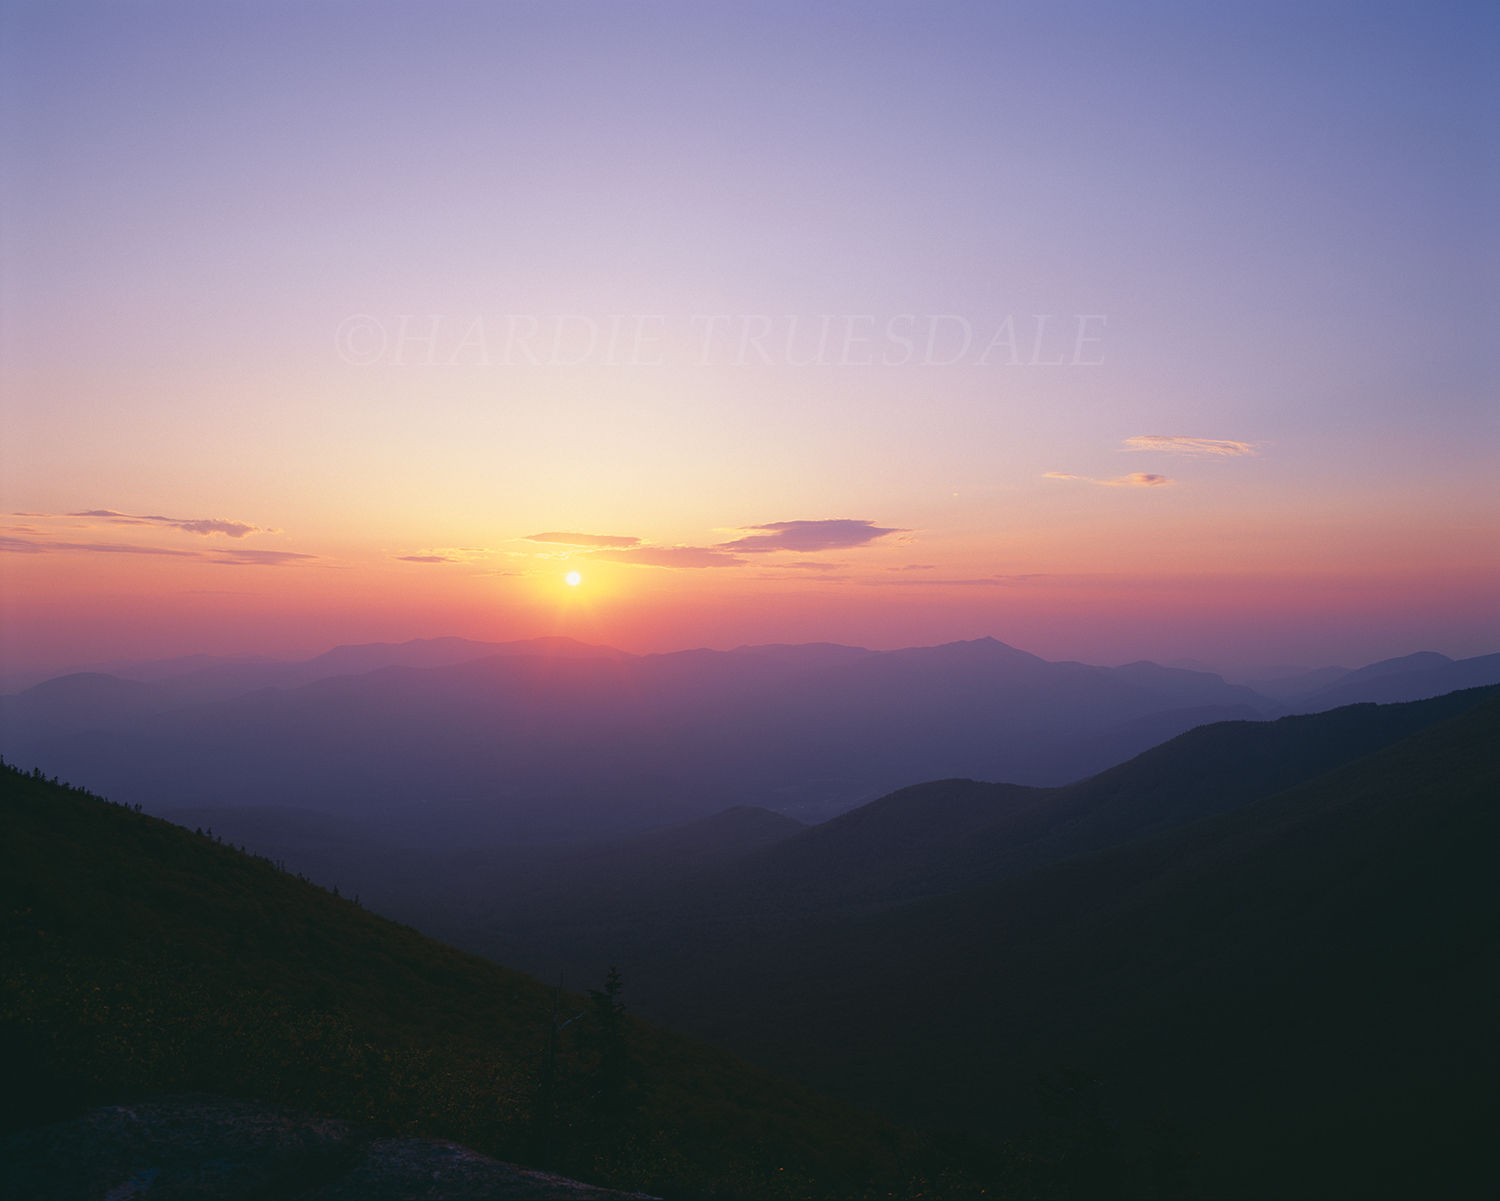 Adk#055 "High Peaks Sunrise from Cascade"